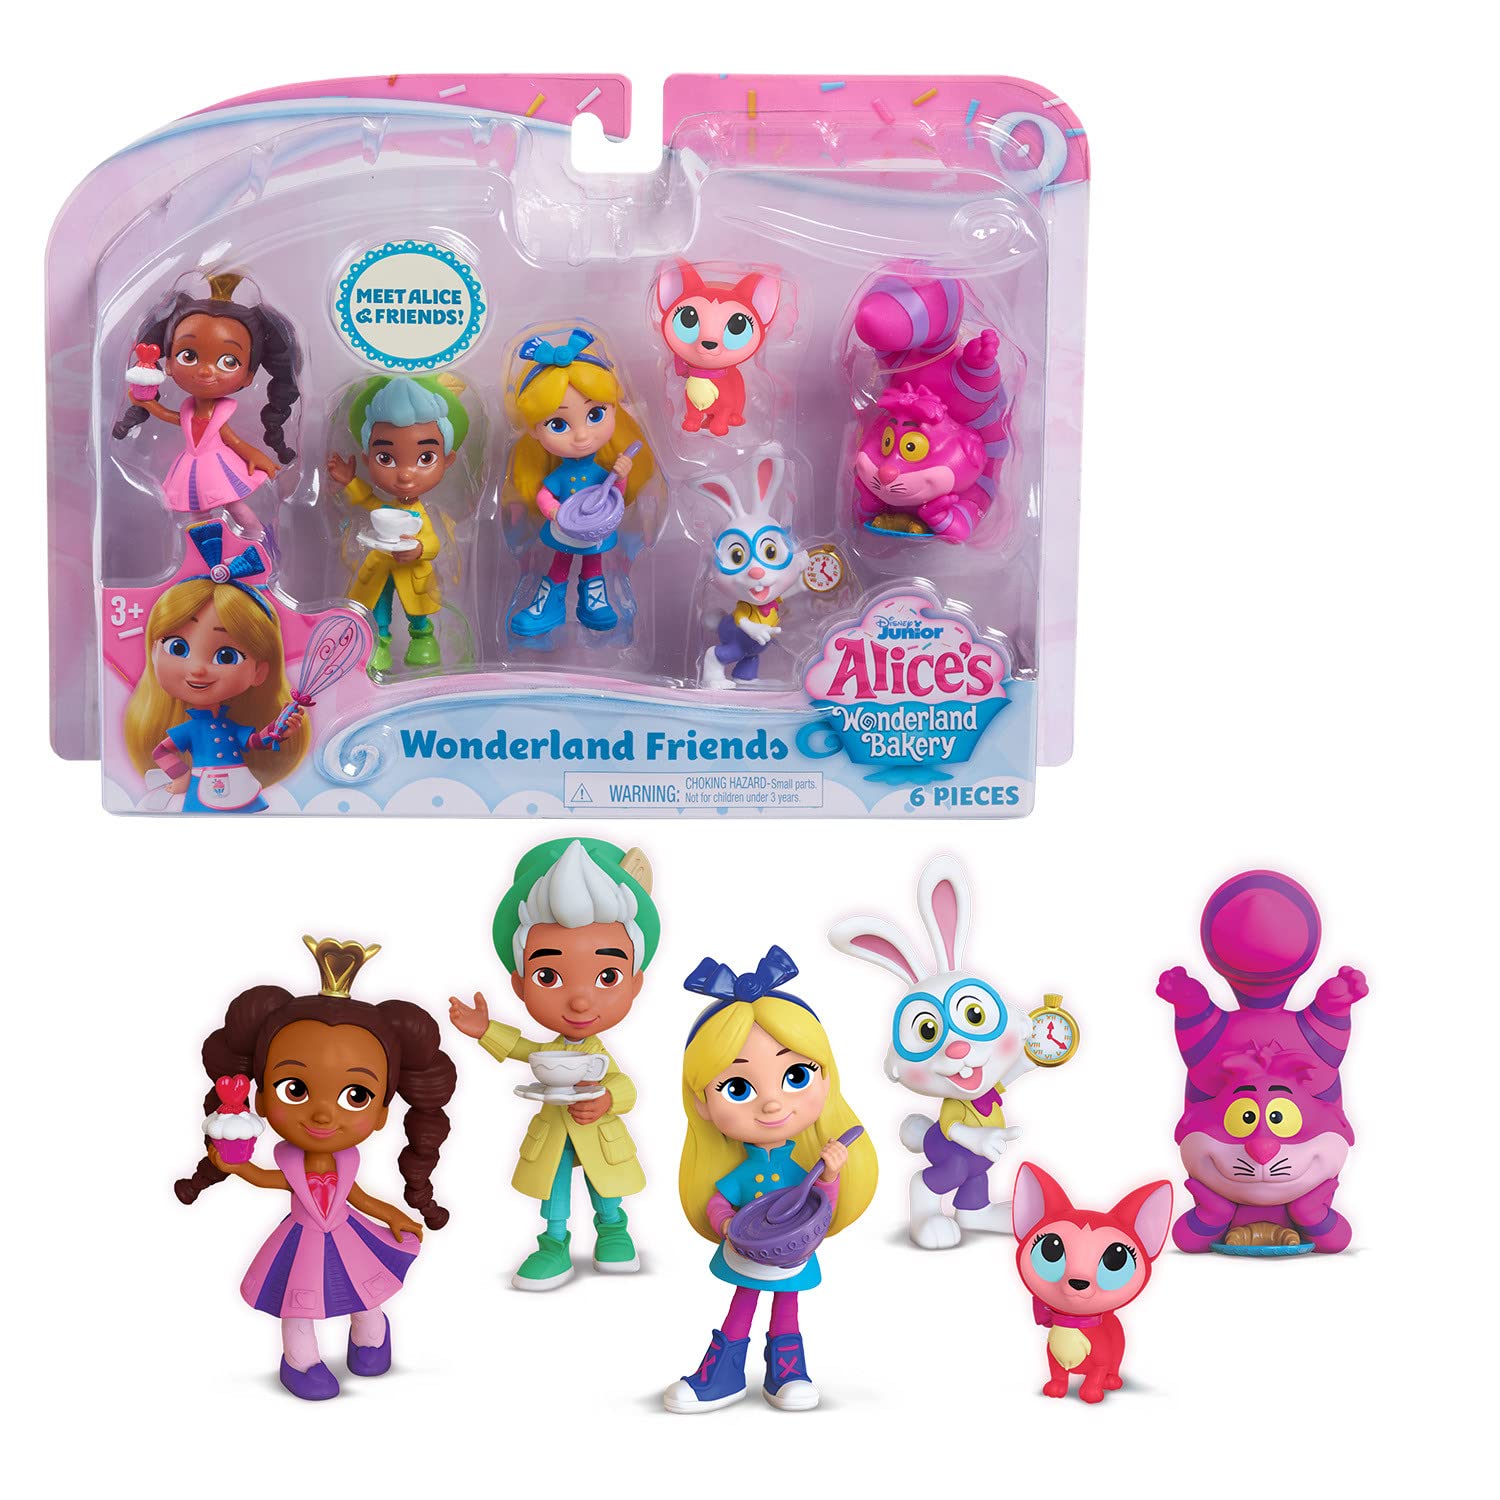 Disney Junior Alice’s Wonderland Bakery Friends, 3 Inch Figure Set of 6, Kids Toys for Ages 3 Up